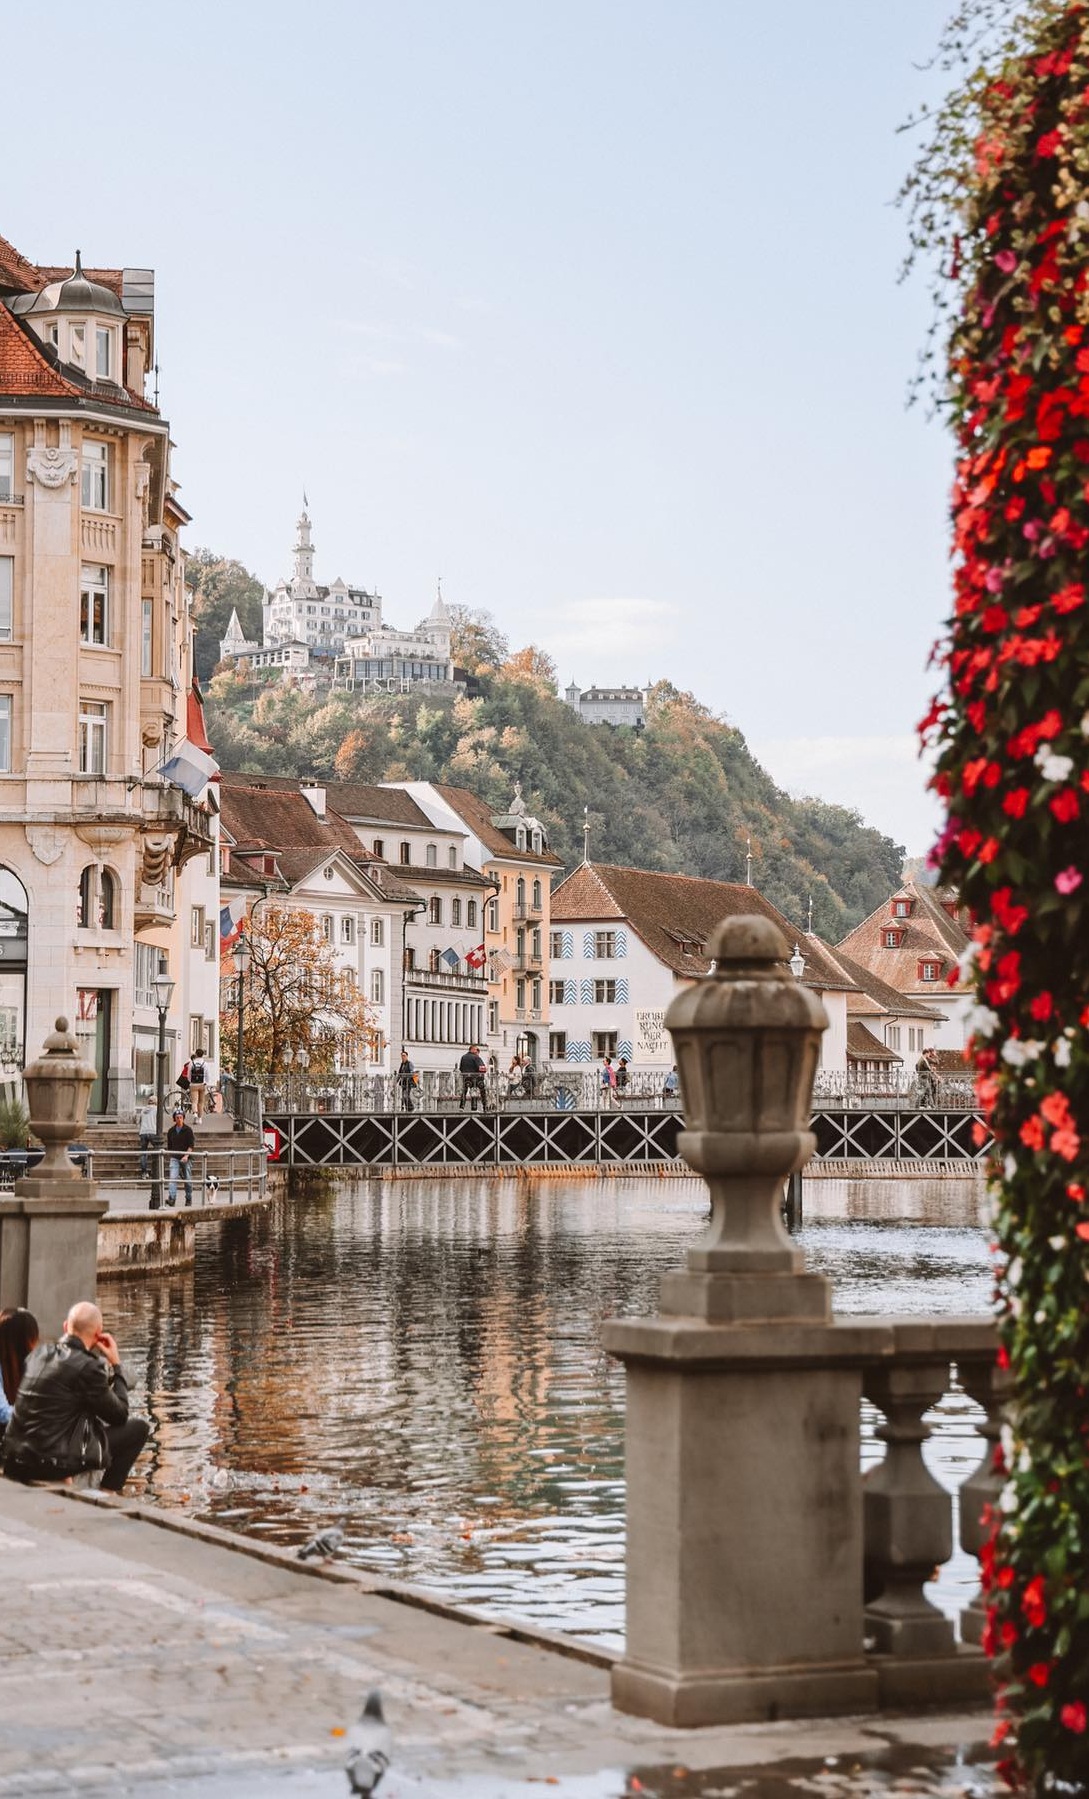 Lucerne, Switzerland - Best location for a Lake side destination wedding